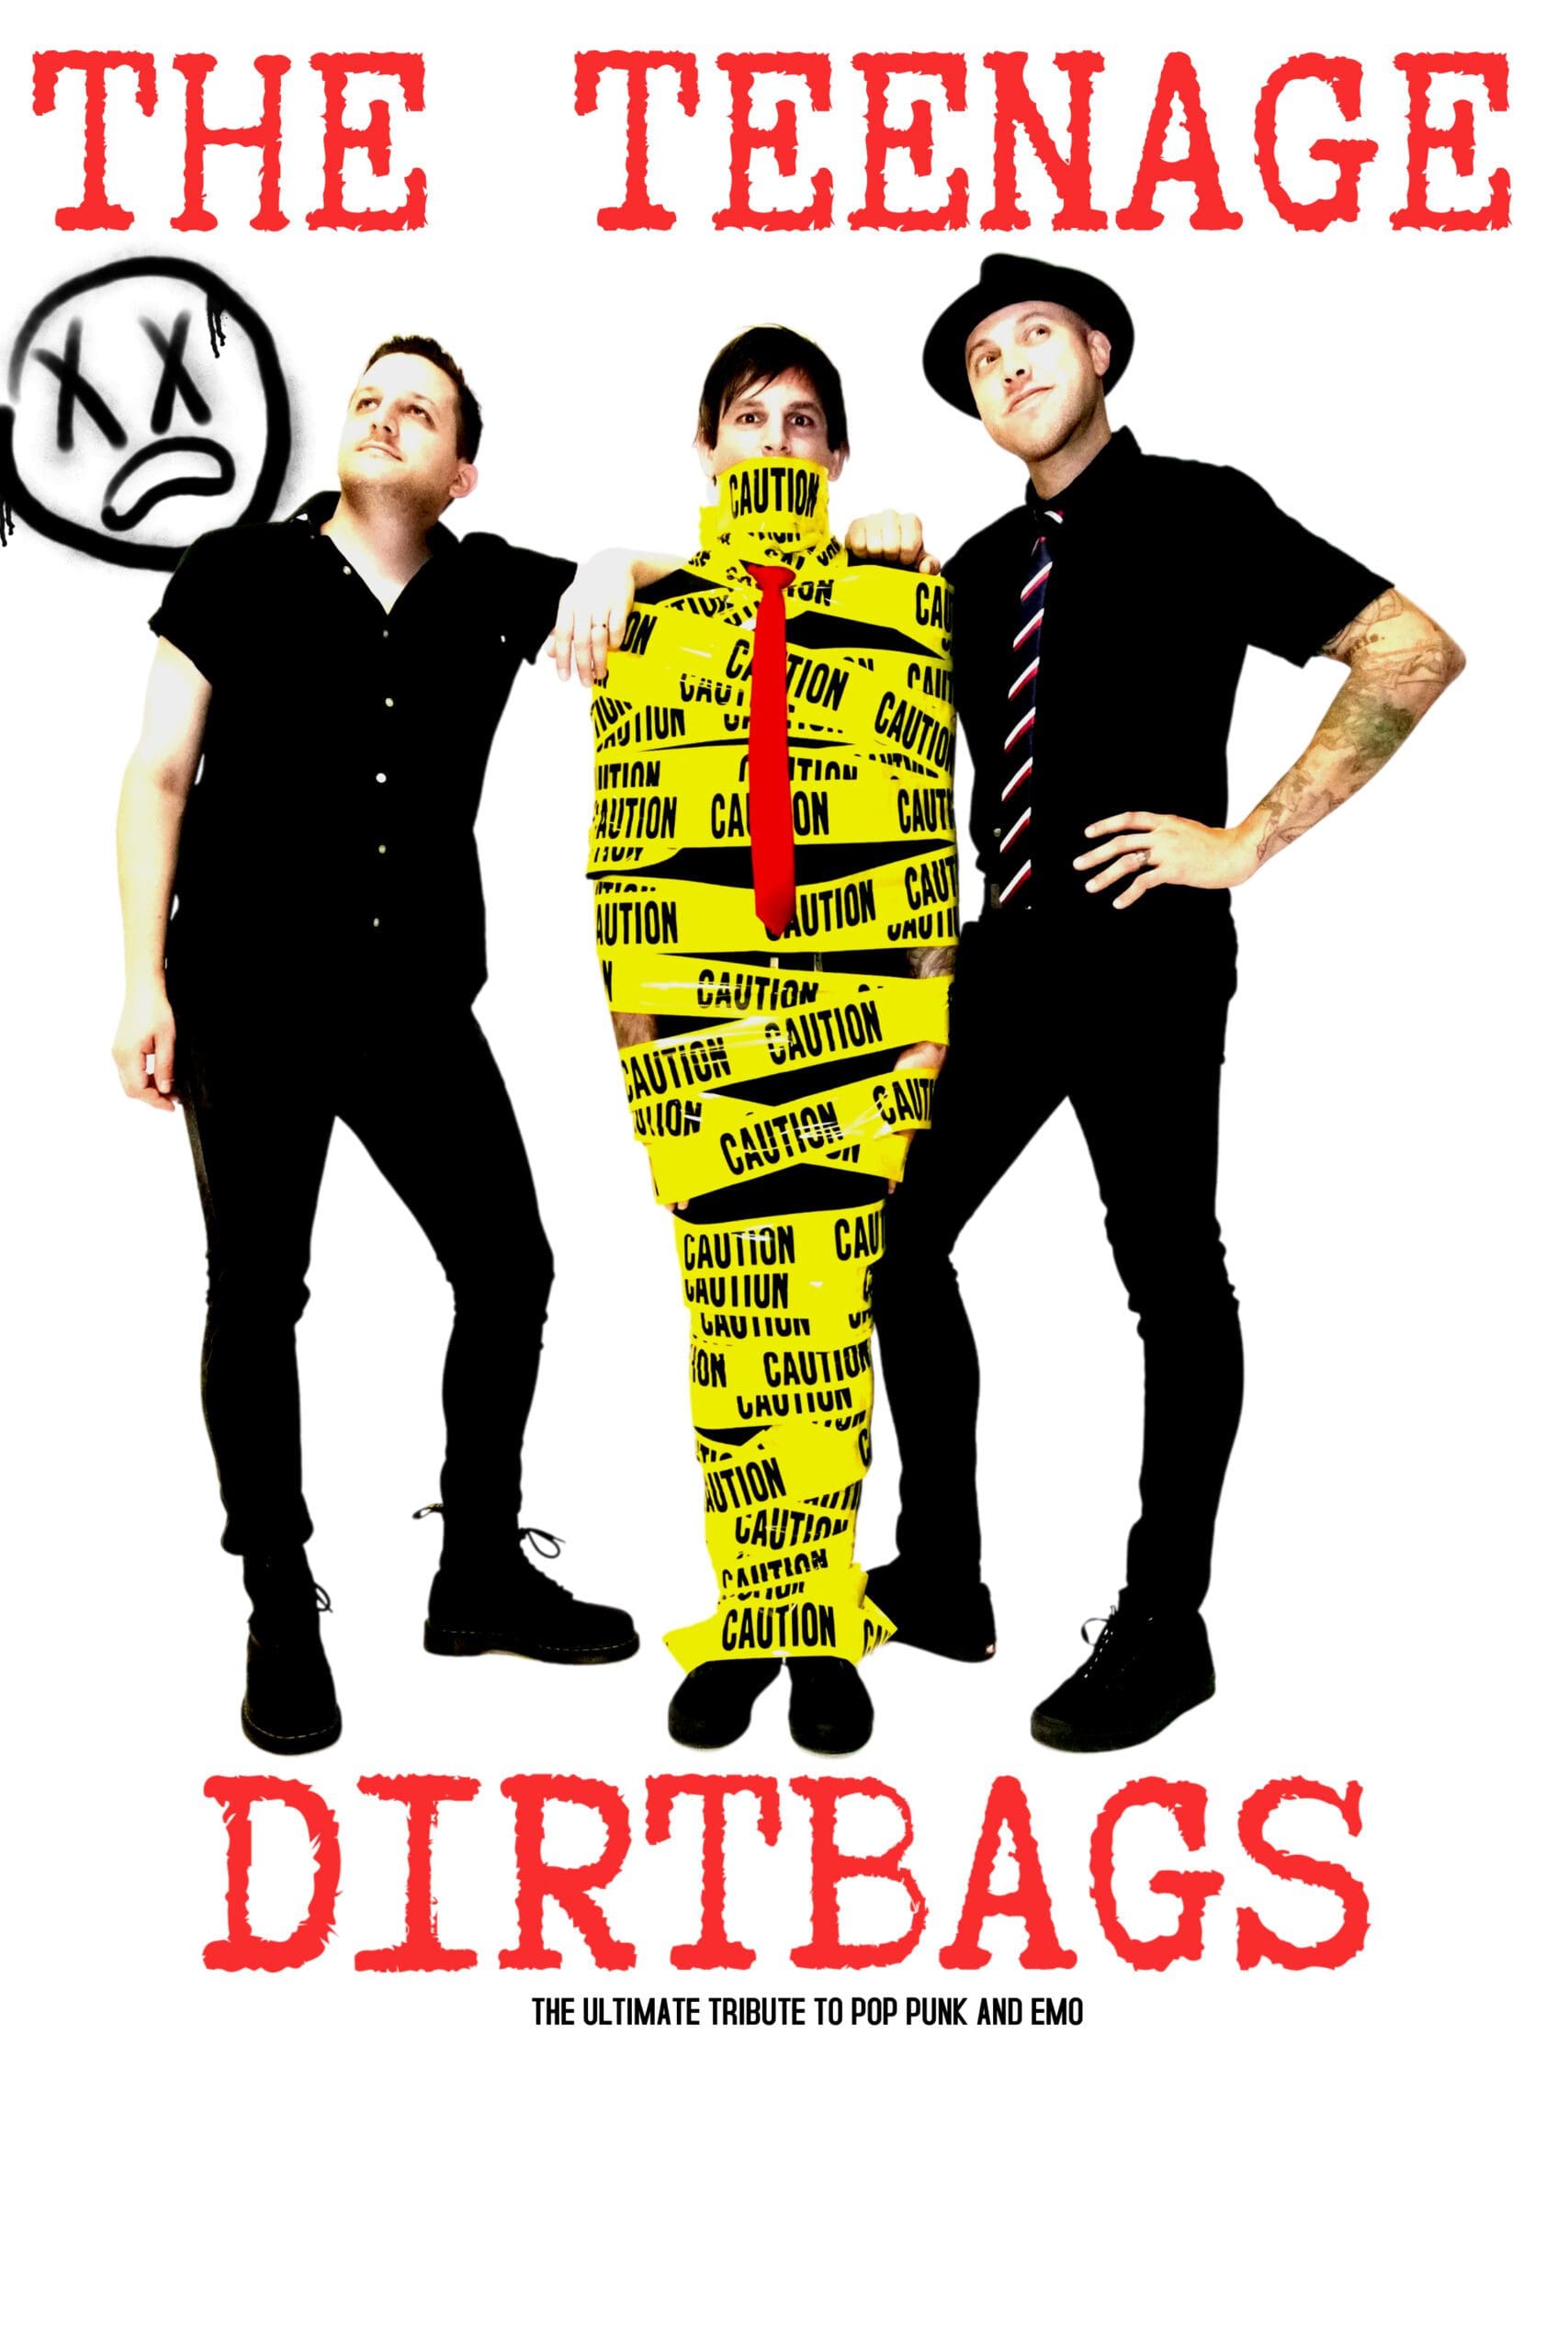 Teenage-Dirtbags-A4-Image-V2-1-scaled.jpg